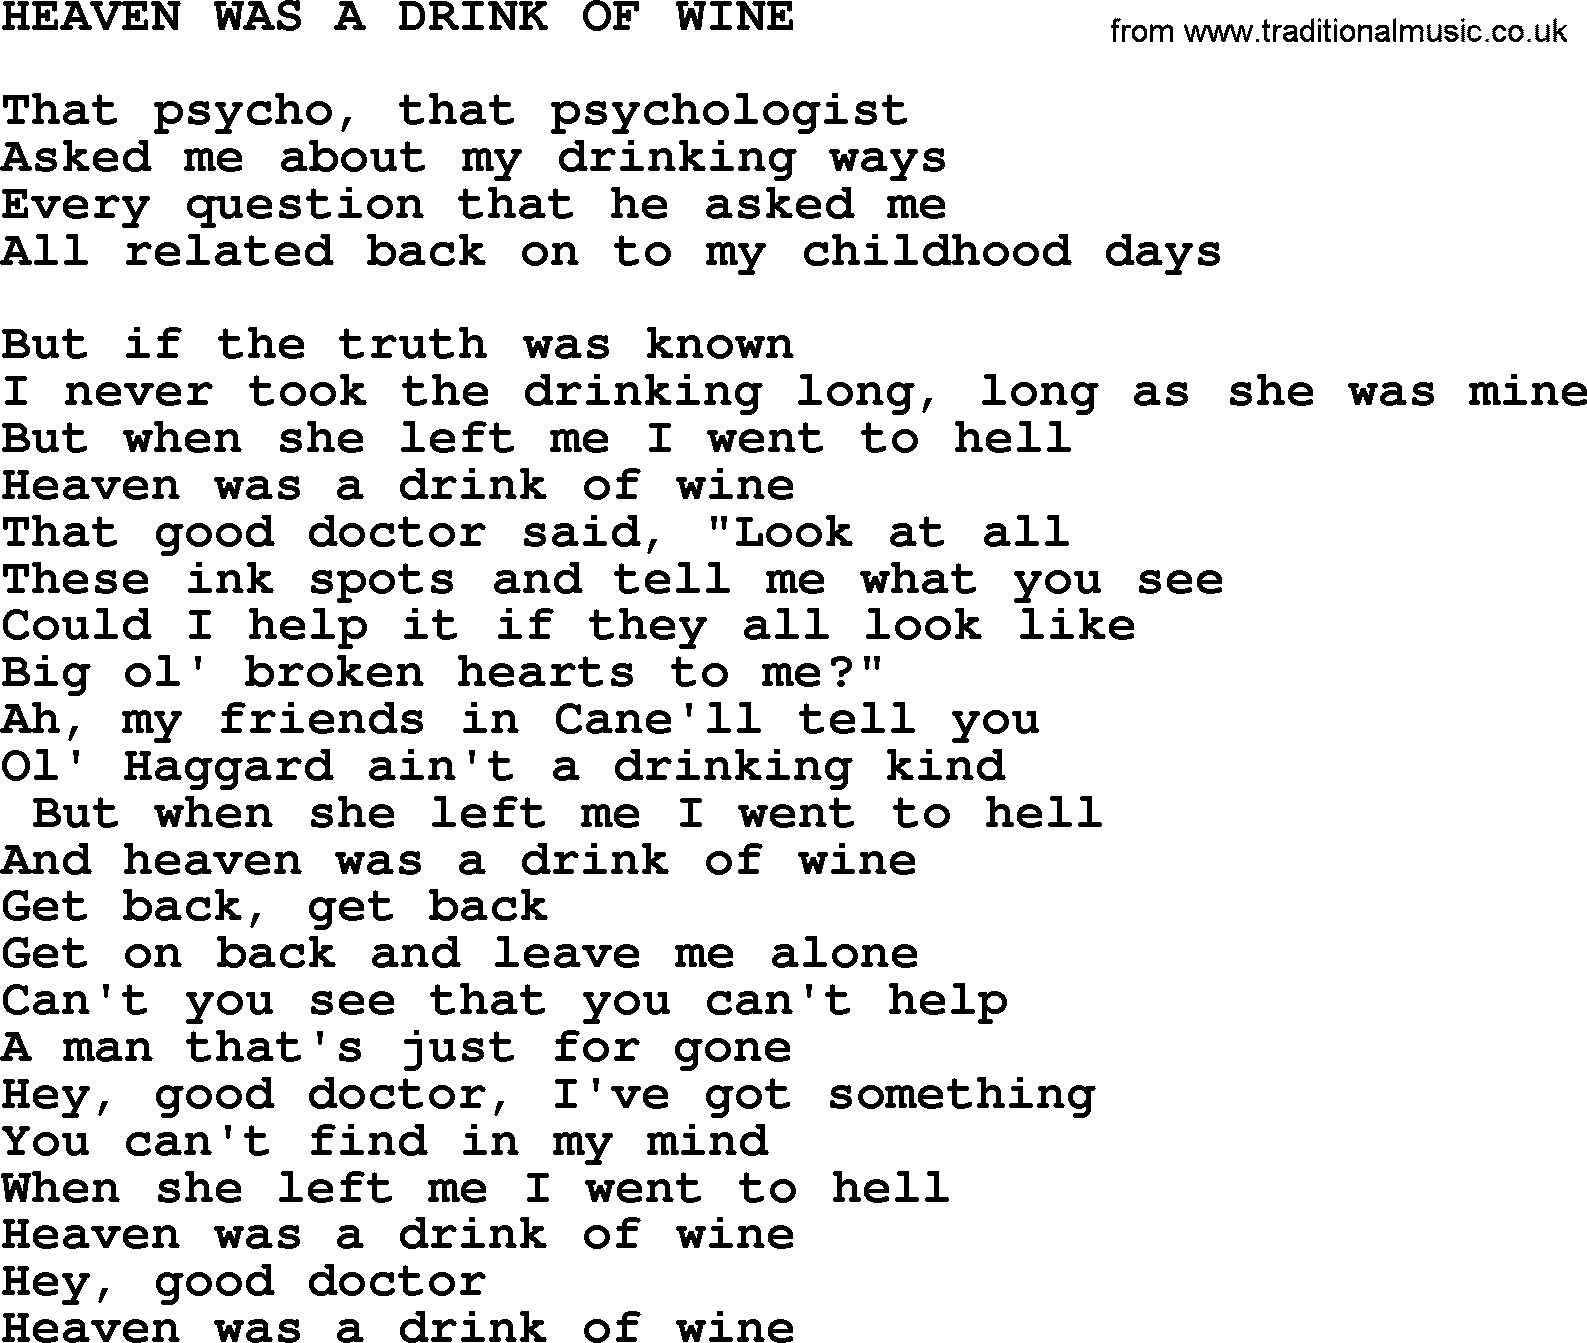 Merle Haggard song: Heaven Was A Drink Of Wine, lyrics.